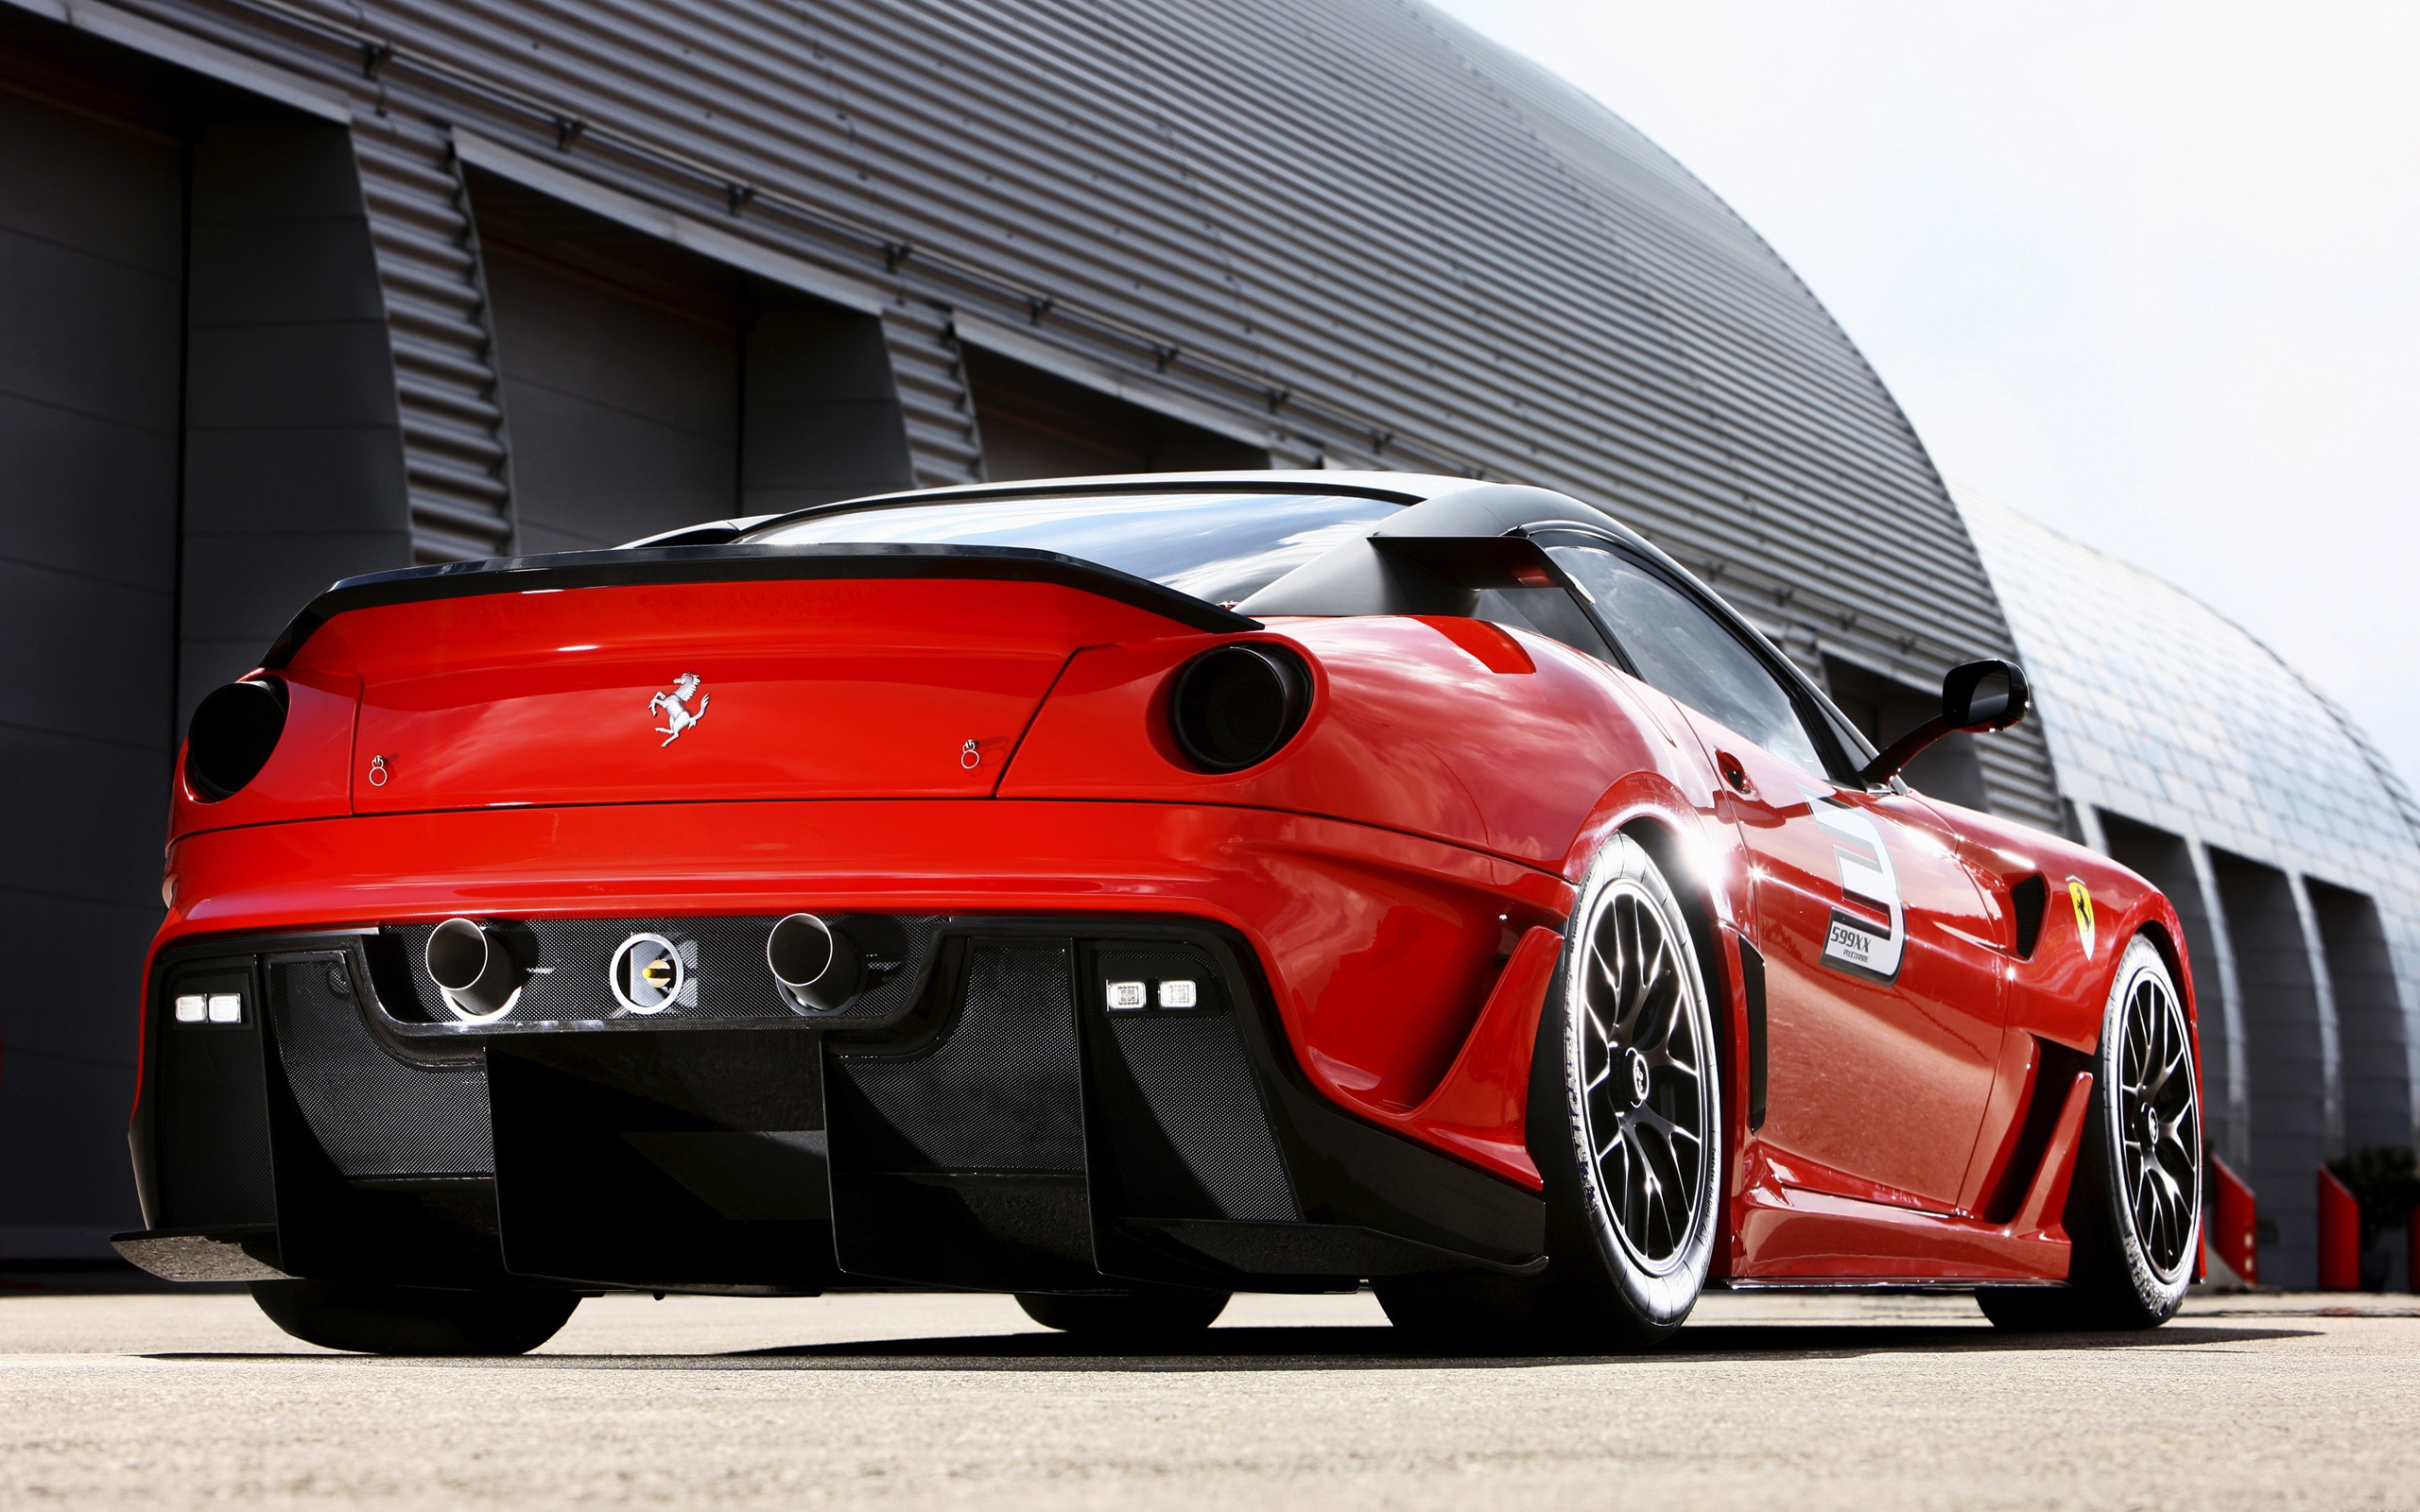 General 2560x1600 car Ferrari Ferrari 599XX red cars vehicle supercars italian cars Stellantis